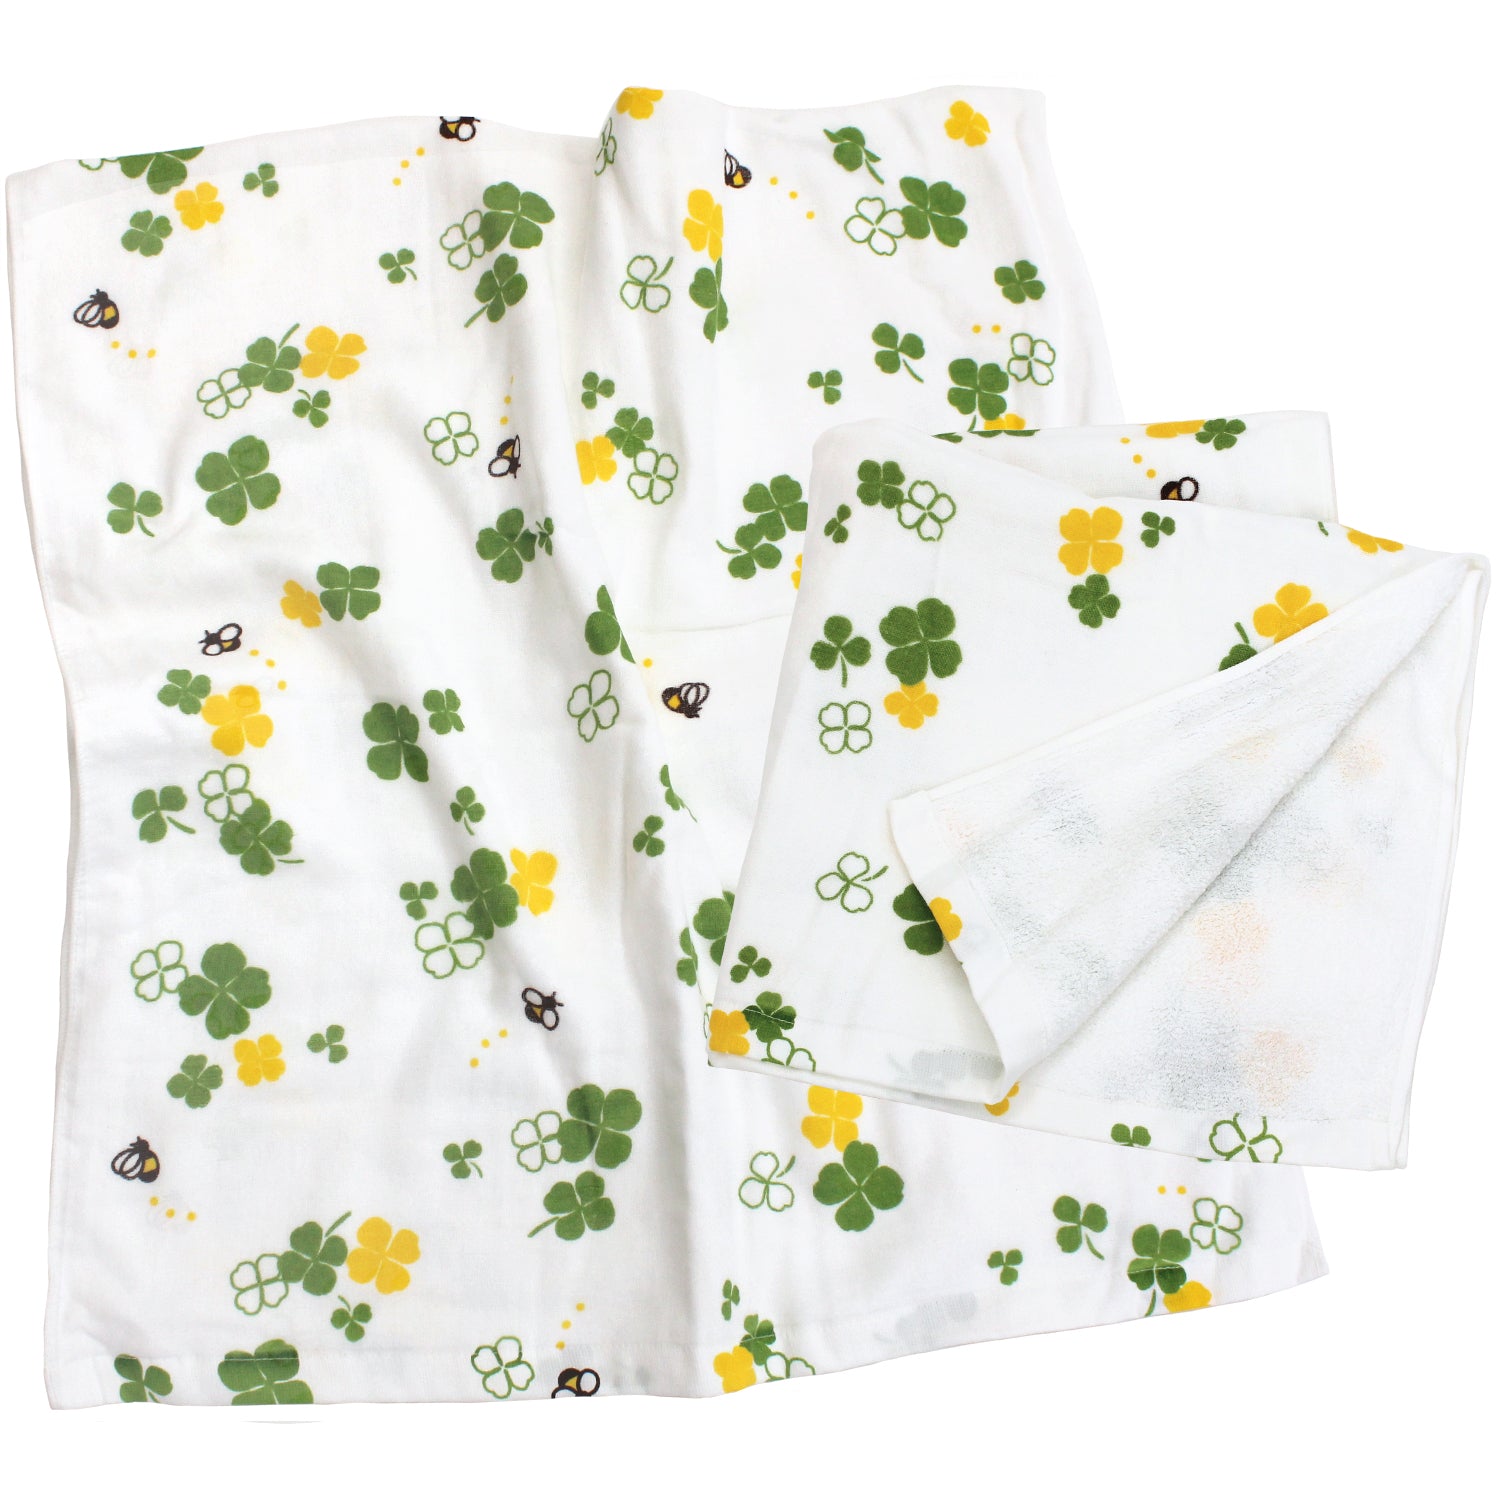 Hiorie Gauze Water-Absorption Soft Touch Bath Towel 2 Sheets Cotton 100% Japan